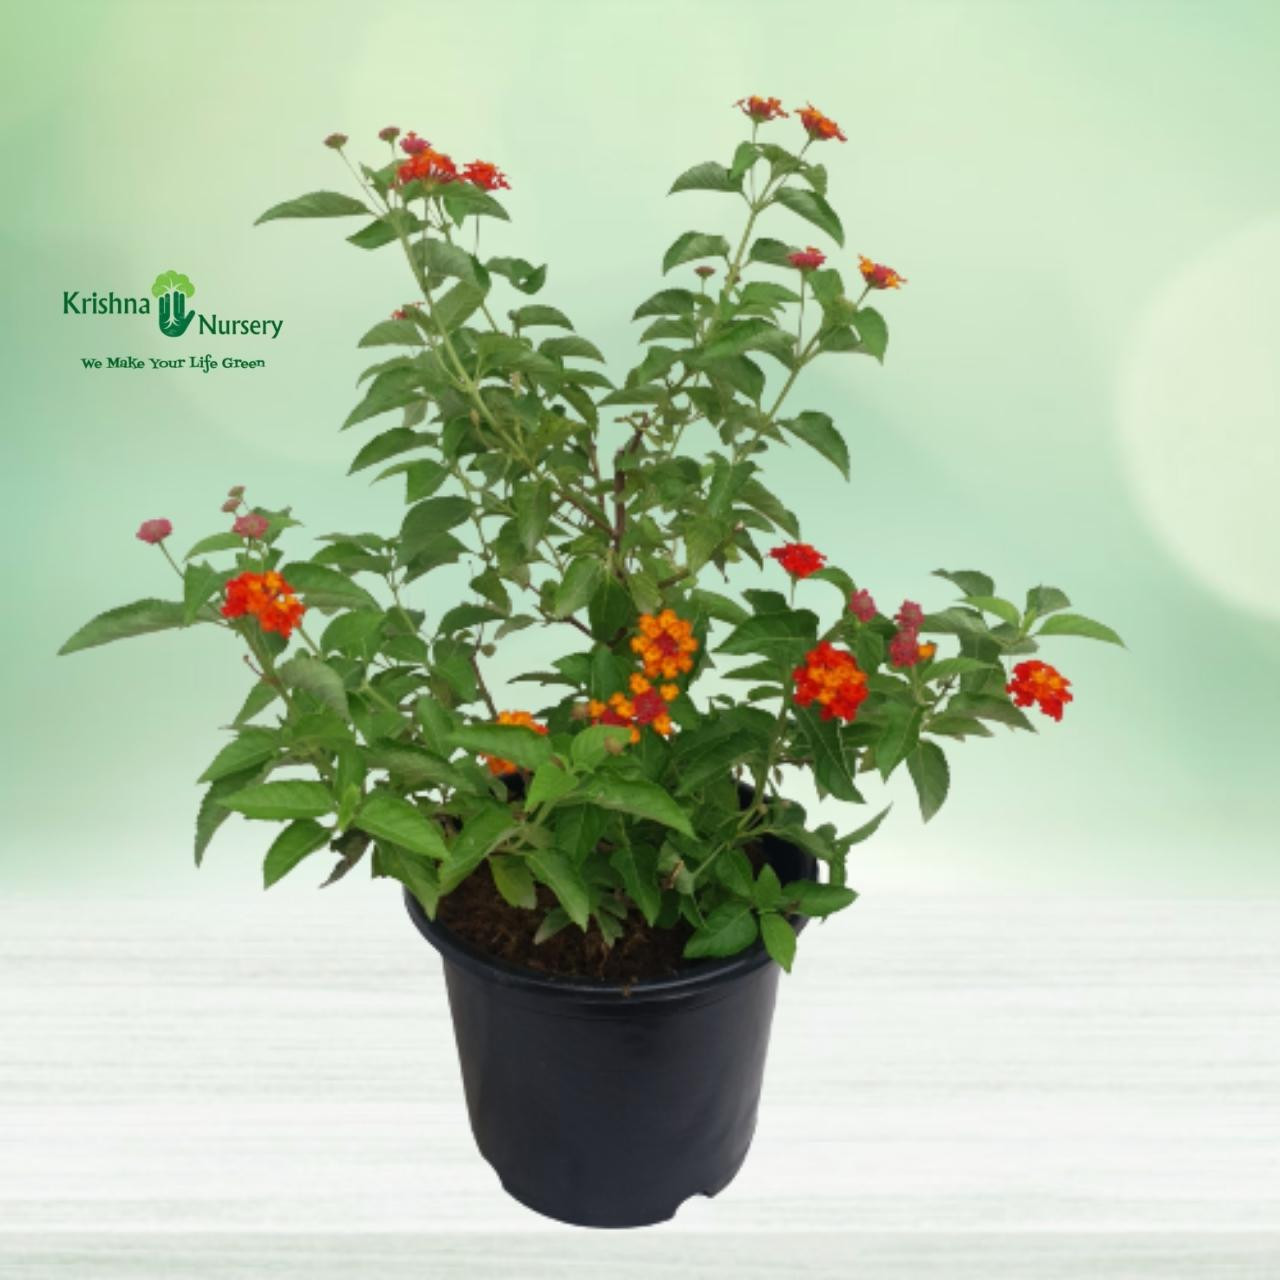 lantana-plant-red-flower